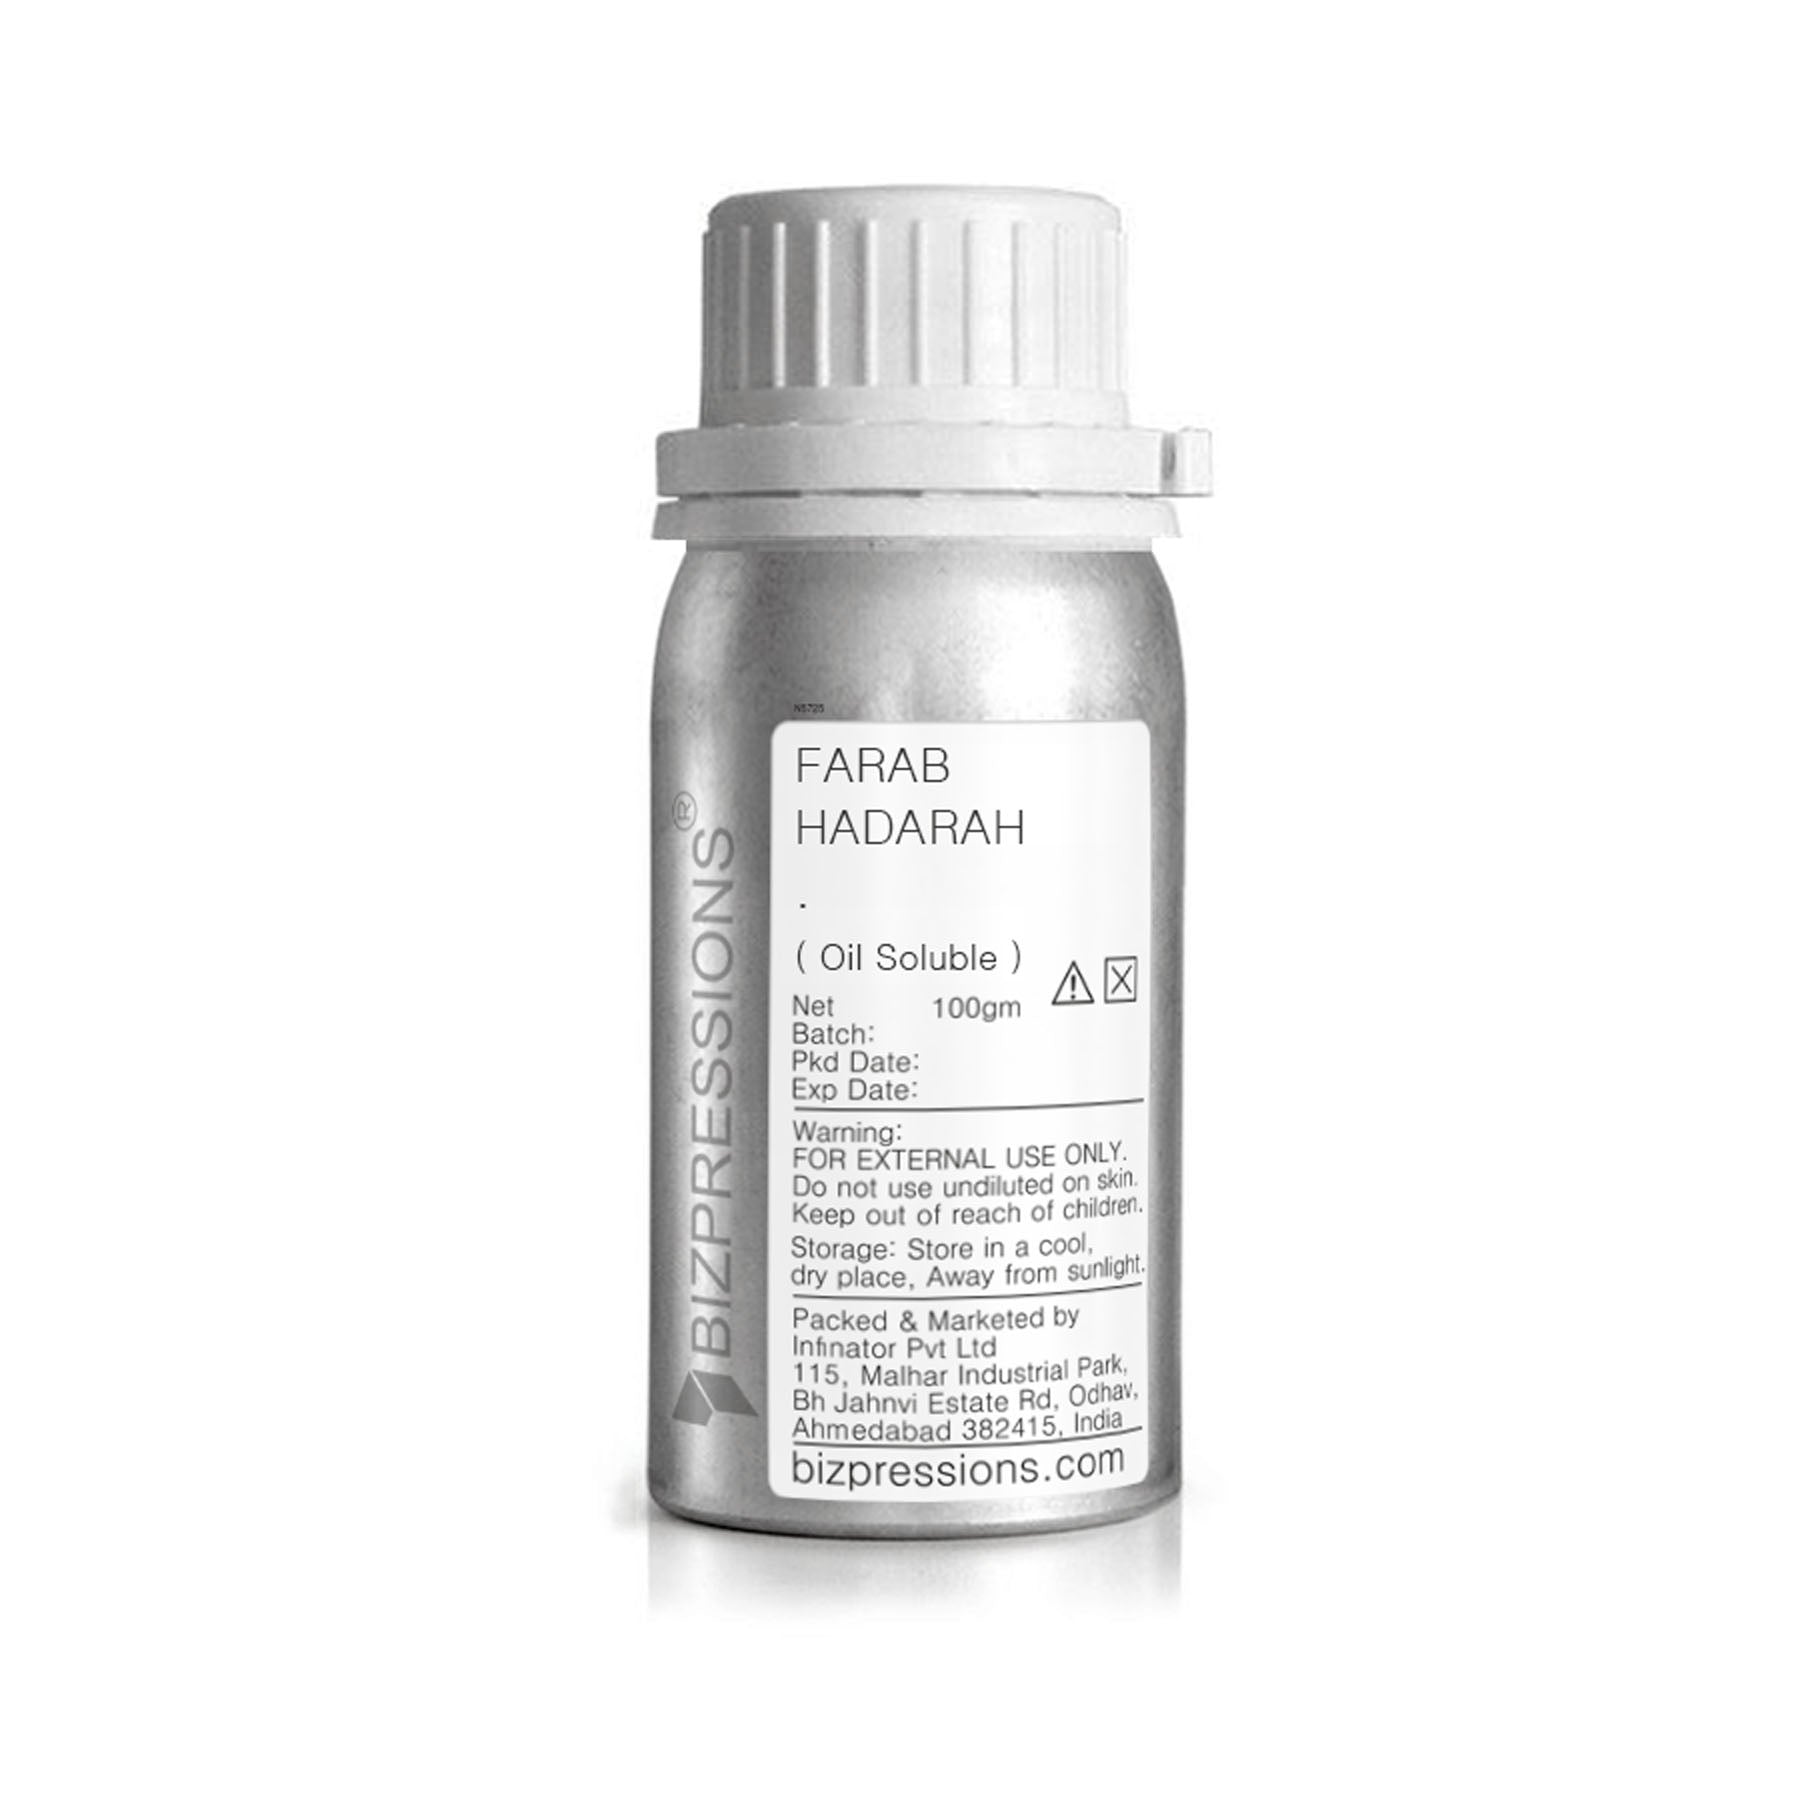 FARAB HADARAH - Fragrance ( Oil Soluble ) - 100 gm